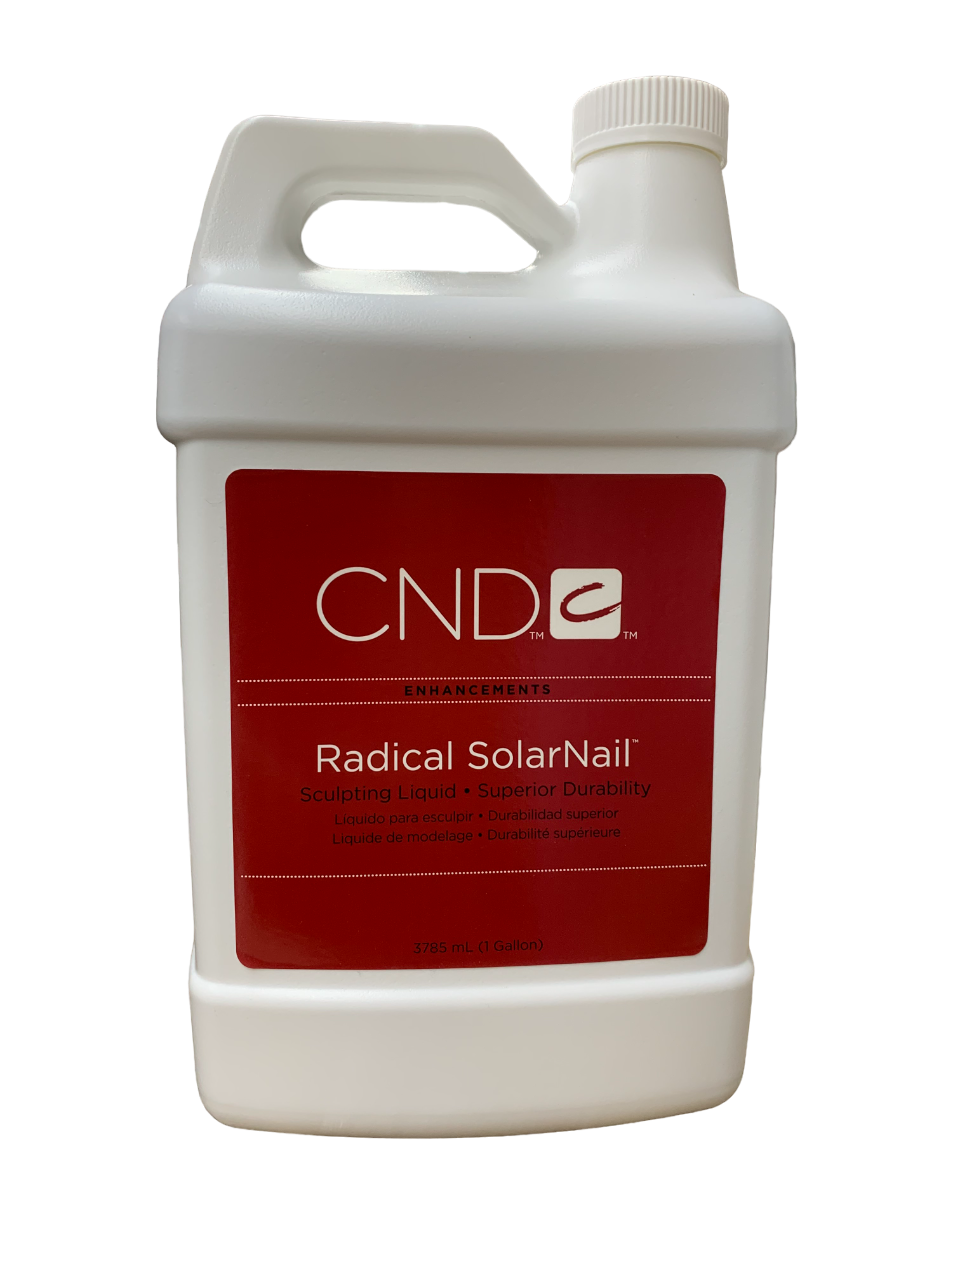 CND Radical SolarNail Sculpting Liquid